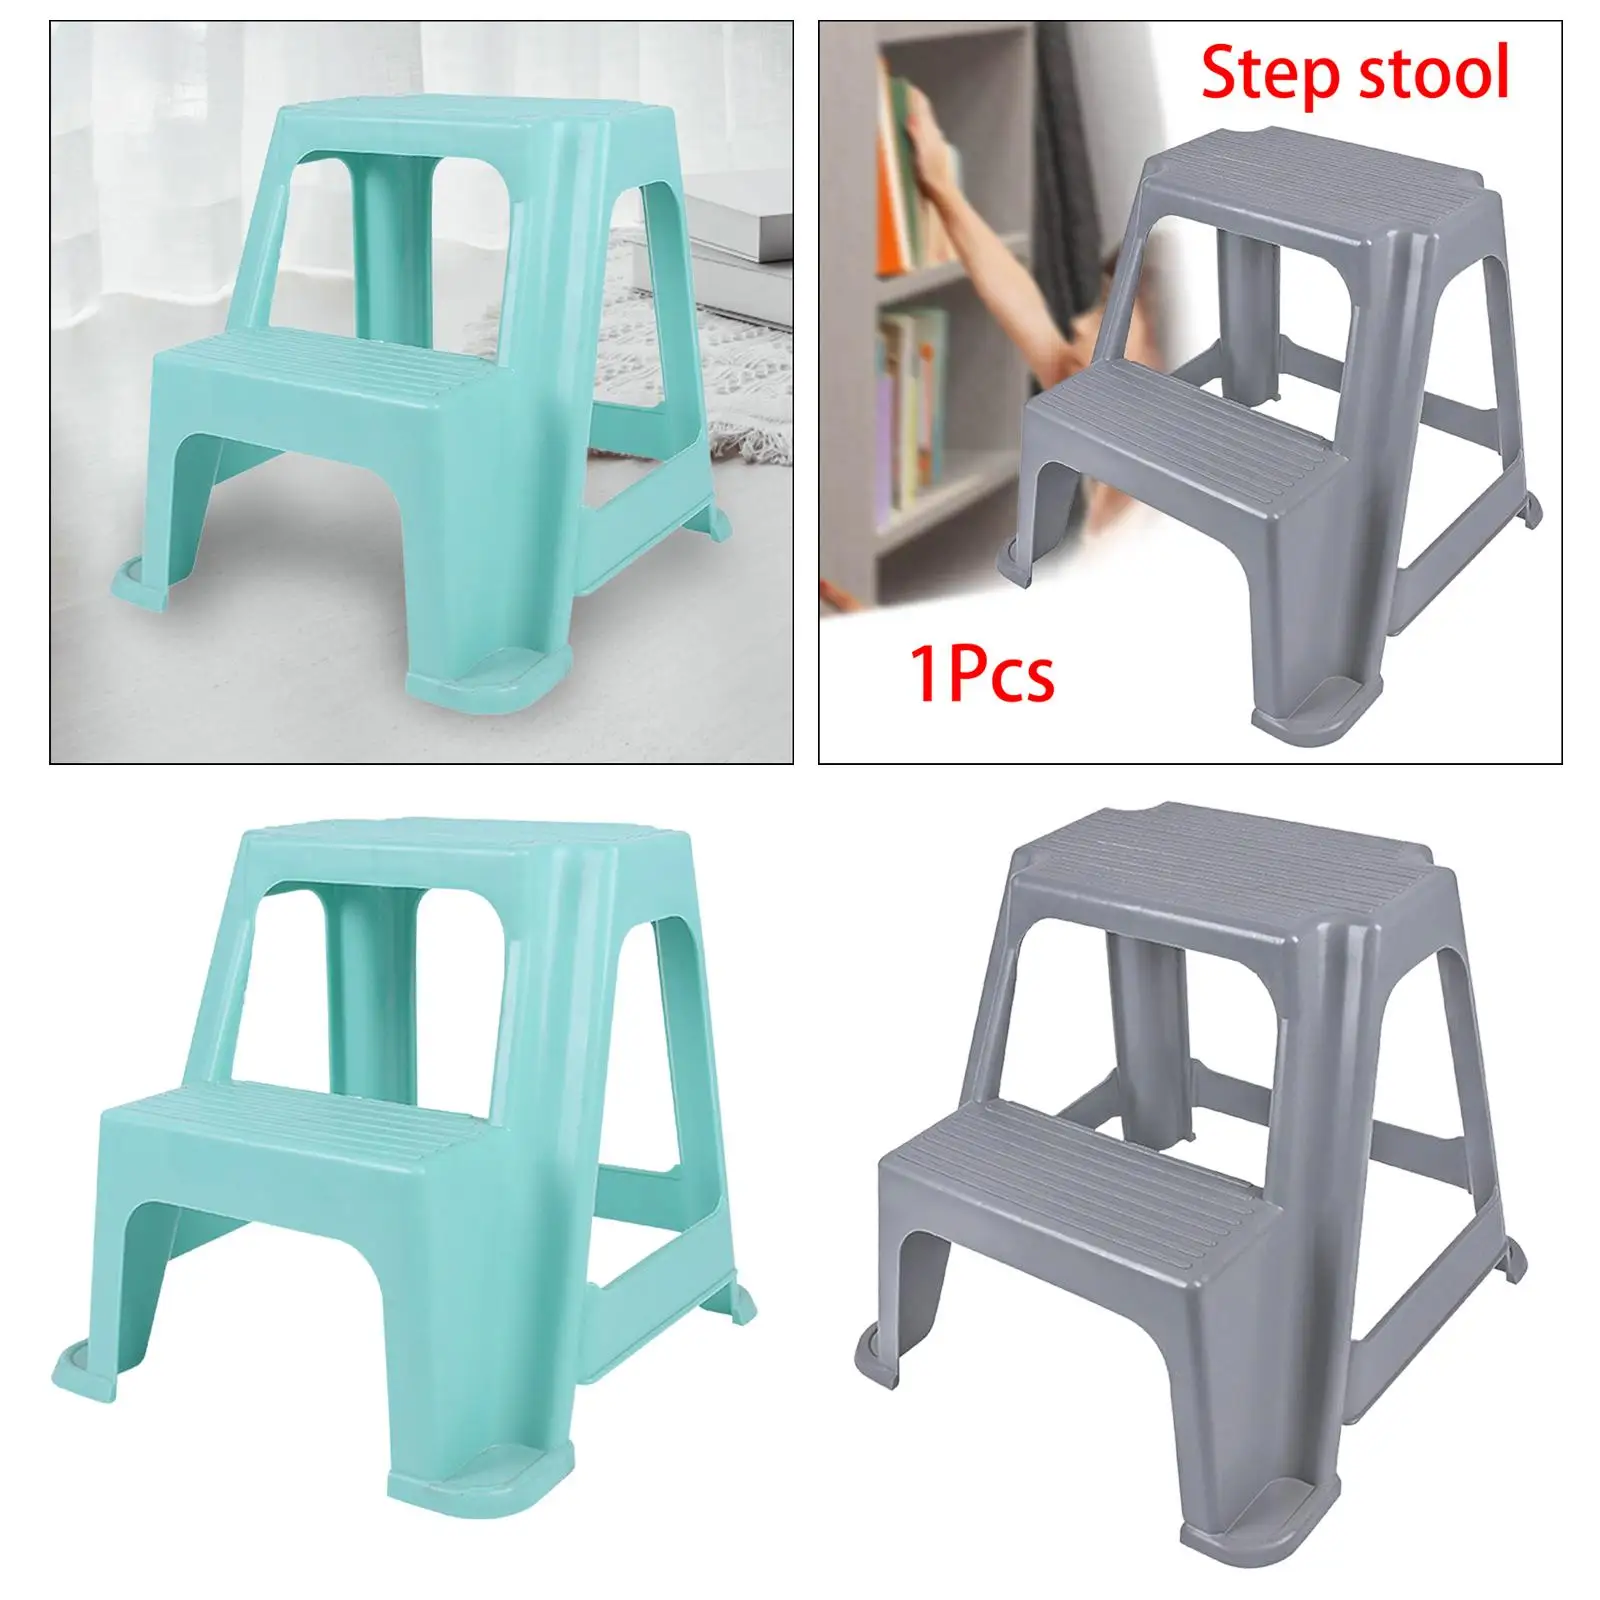 Two Step Stool Bedside Step Stool Non Slip Portable Footstool 2 Step Stool Stepstool for Kids Seniors Pets Children Living Room